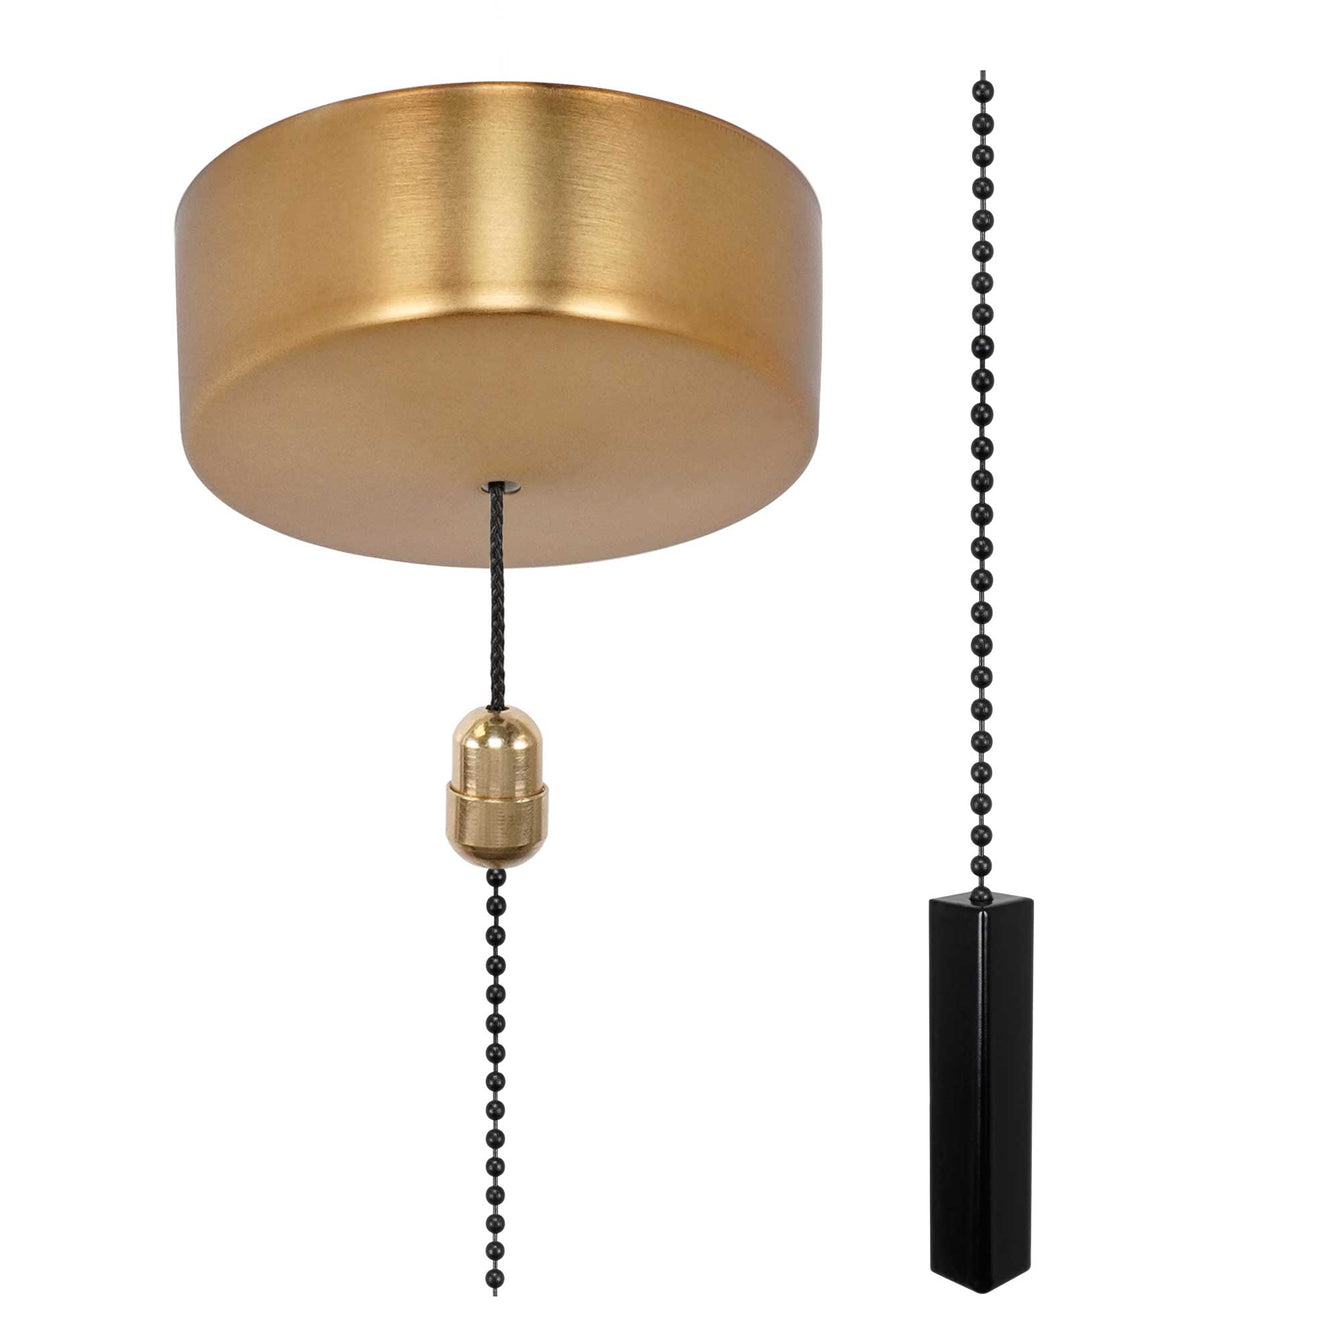 ElekTek Premium Brushed Brass Bathroom Light Pull Cord Switch Kit with Pull Chain Handle White Lighthouse / Brass